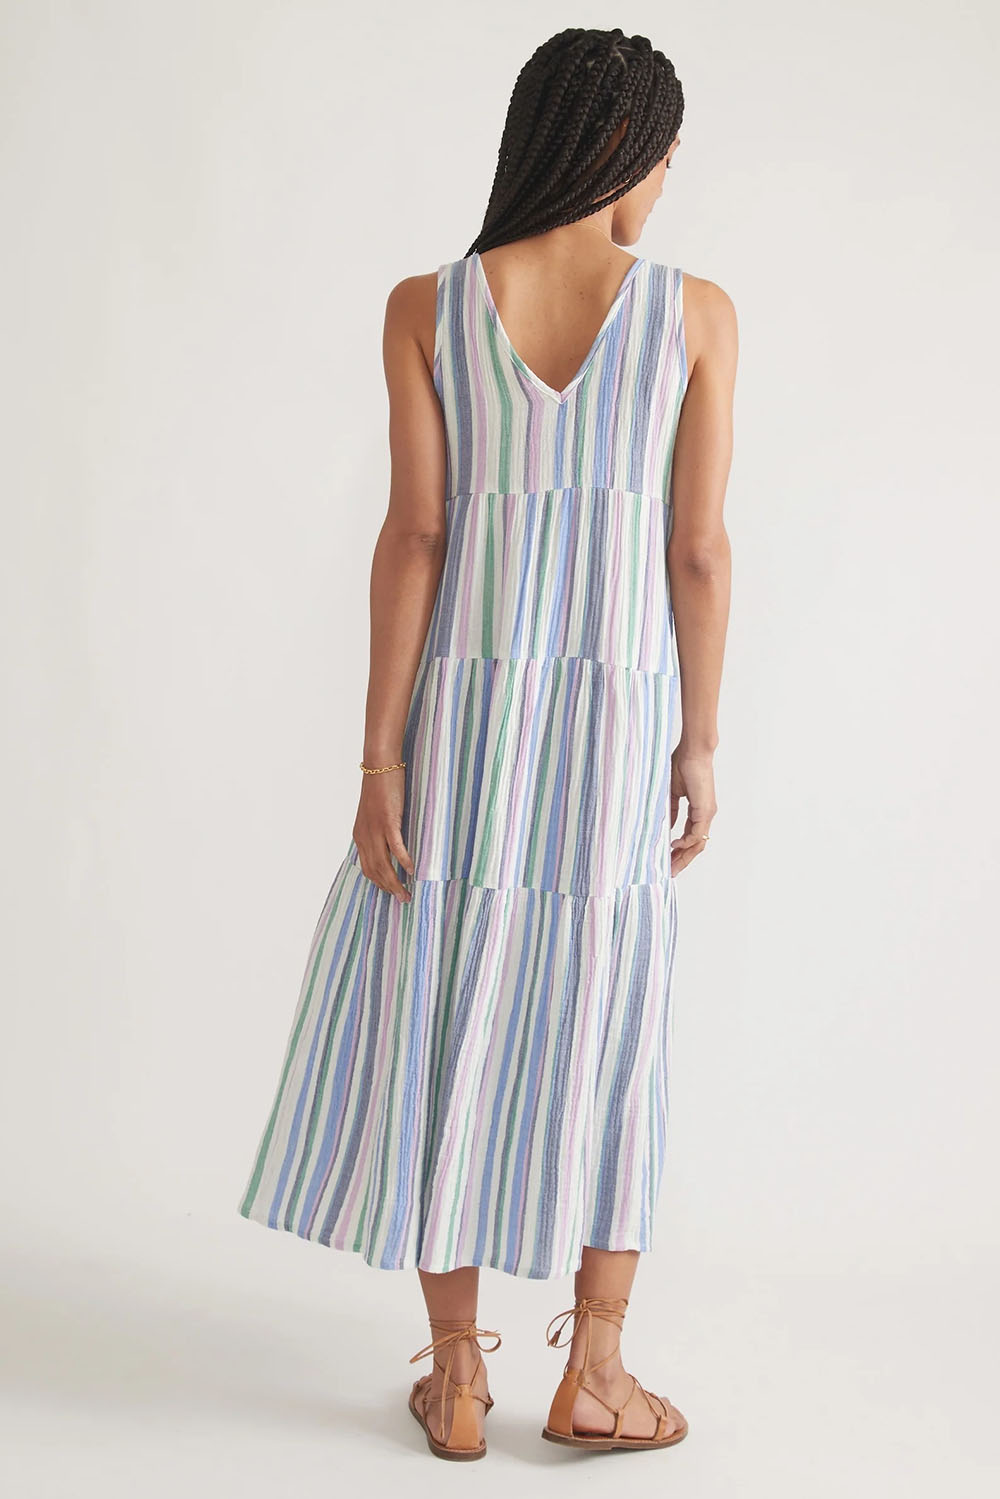 Marine Layer - Corinne Maxi Dress - Multi Cool Stripe - Back